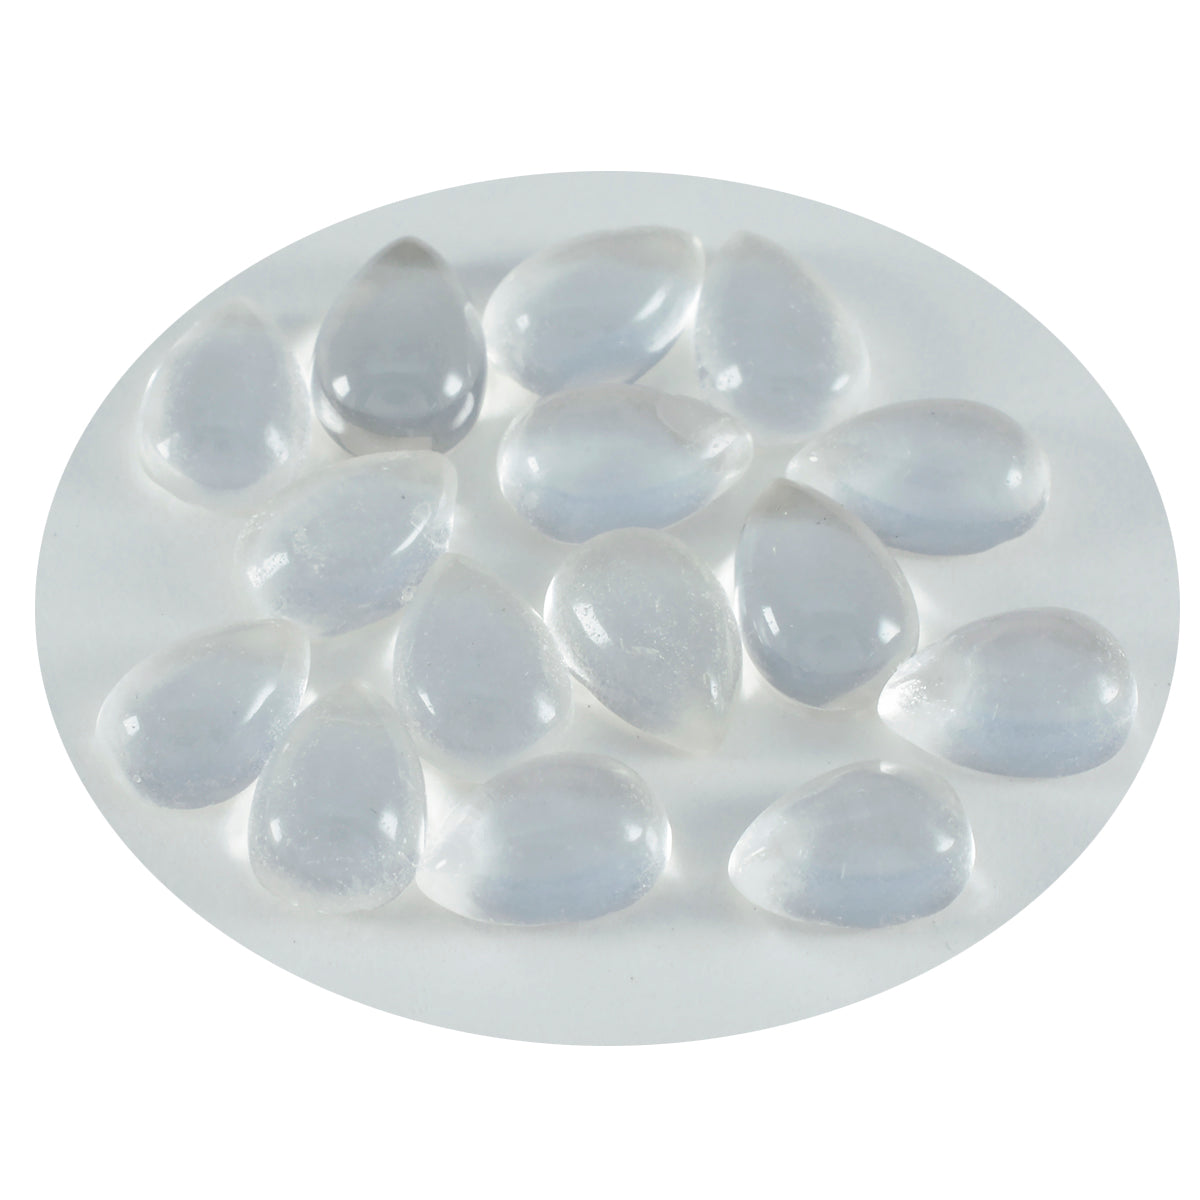 riyogems 1pc cabochon di quarzo di cristallo bianco 7x10 mm gemme di qualità di bellezza a forma di pera